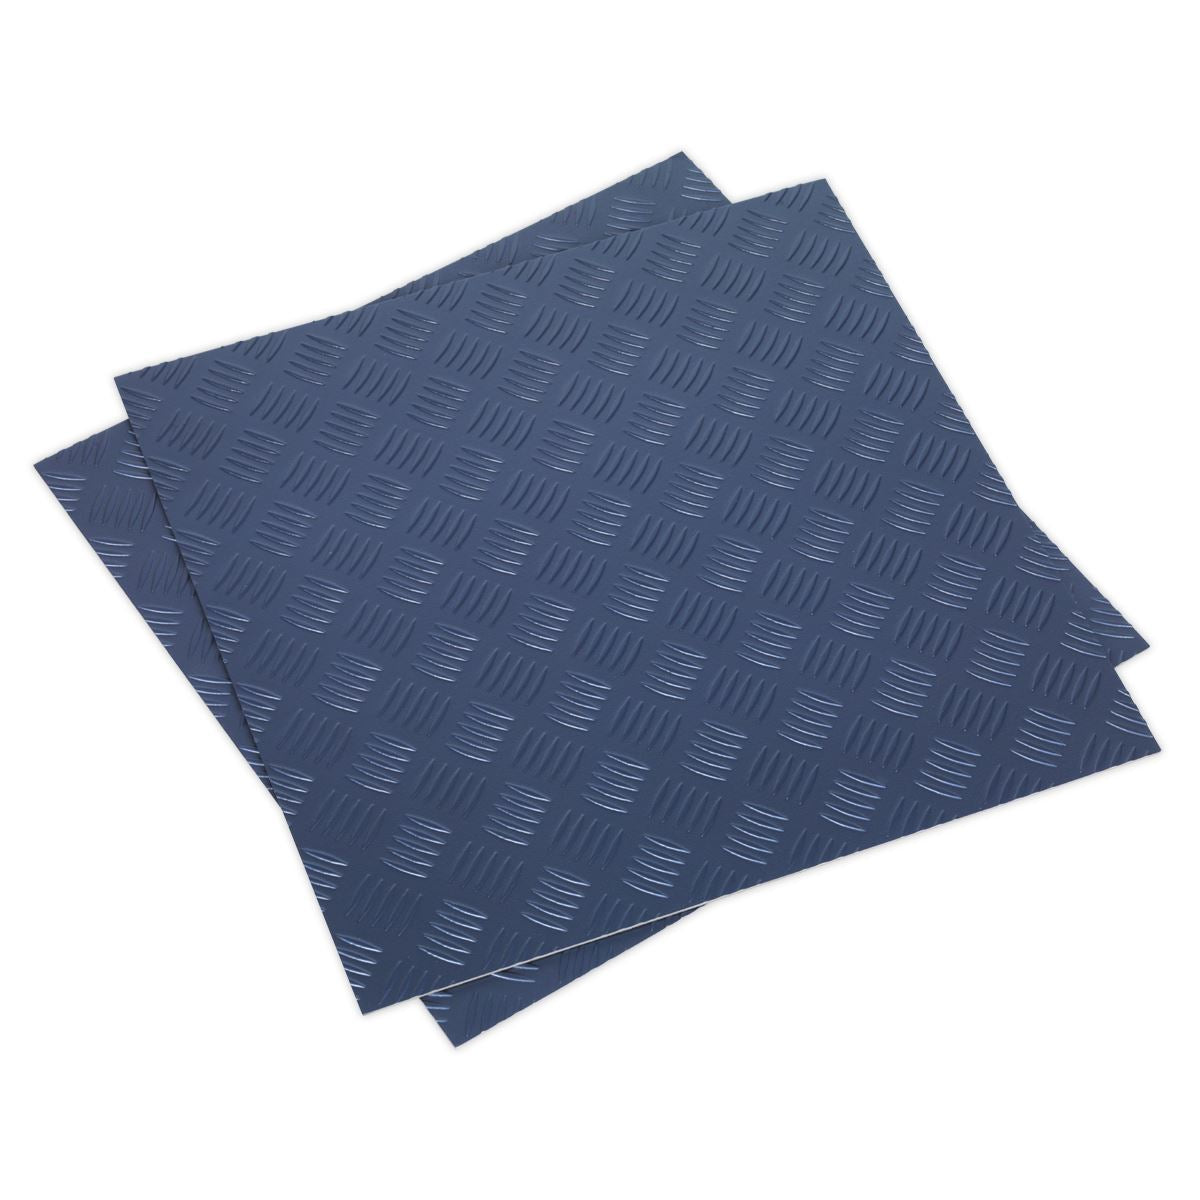 Sealey Vinyl Floor Tile with Peel & Stick Backing - Blue Treadplate Pack of 16